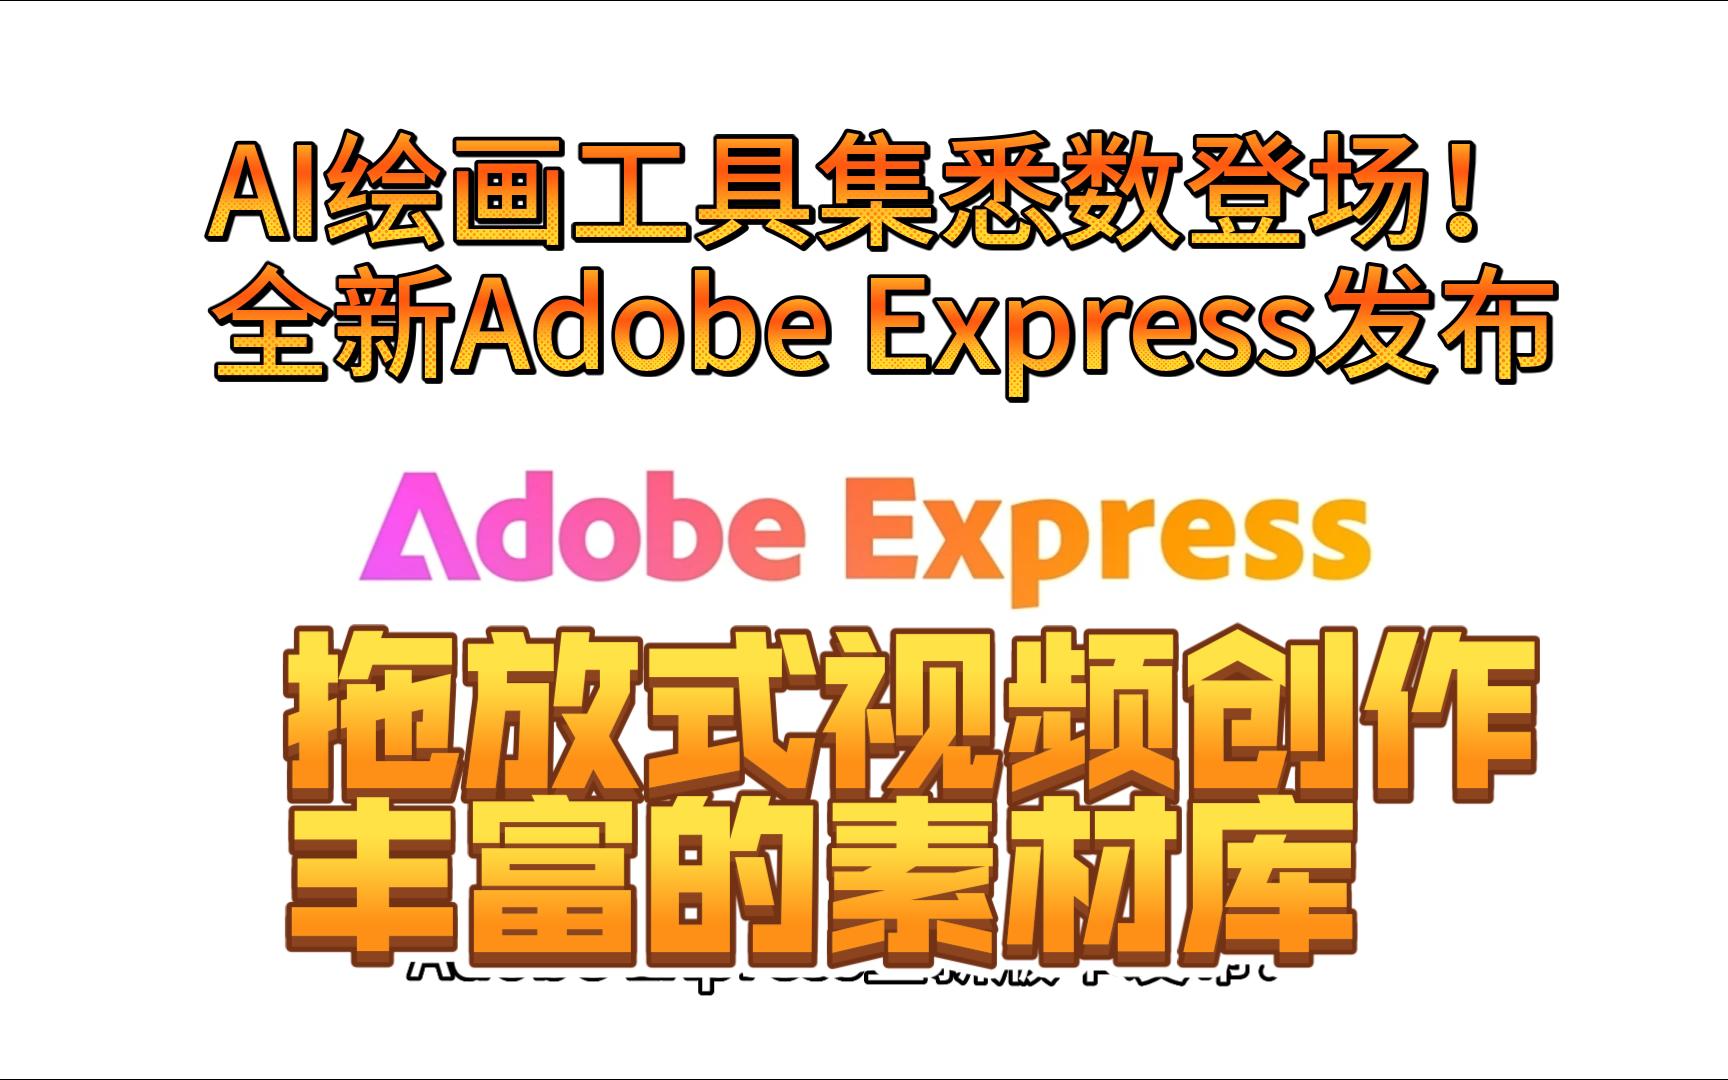 Adobe又双叒更新啦！AI绘画工具集悉数登场！全新Adobe Express发布，释放创意，打造令人惊艳的视频、设计和文档！